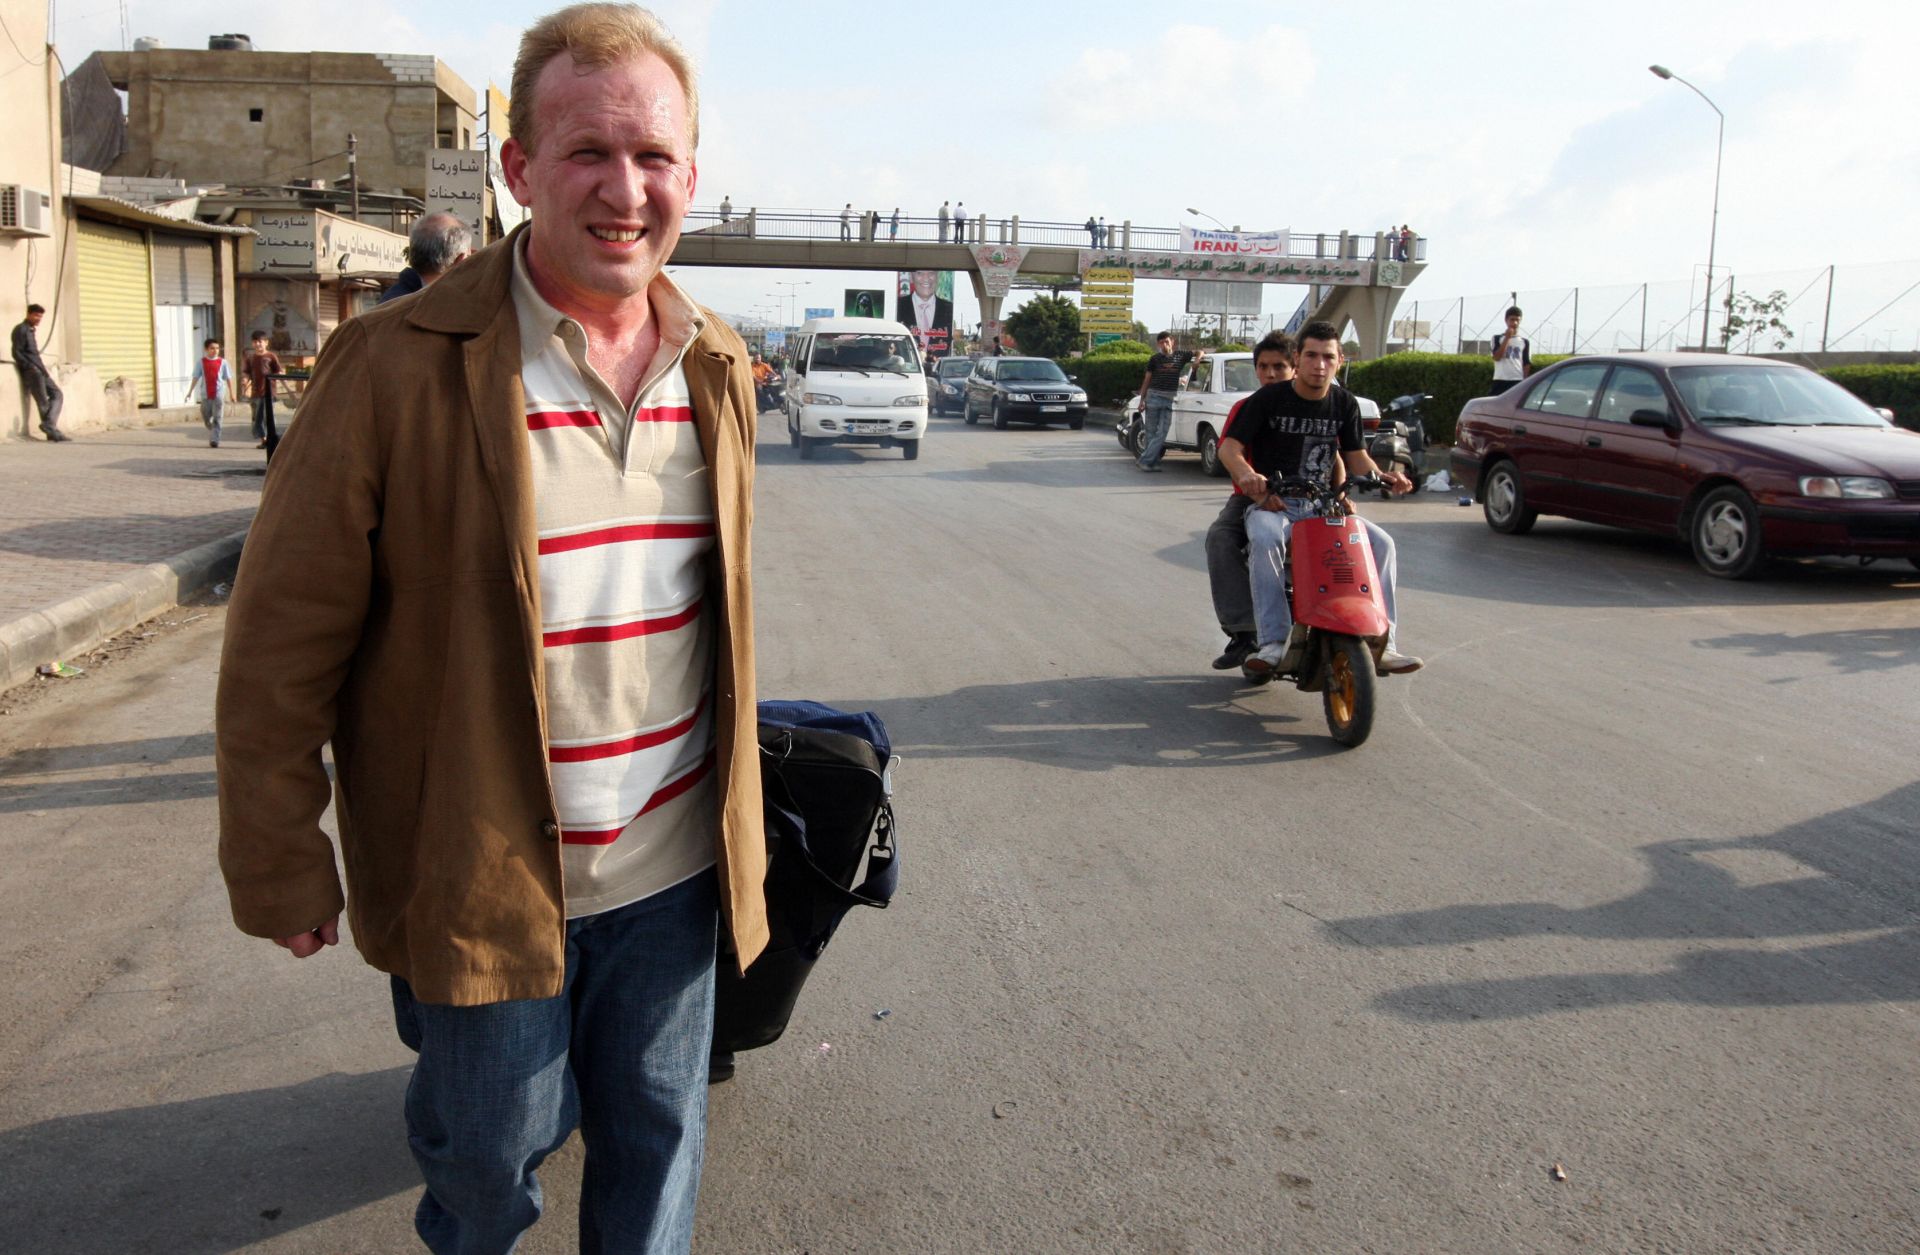 A tourist is a little too obvious as he walks away from Rafik Hariri International Airport in Beirut.